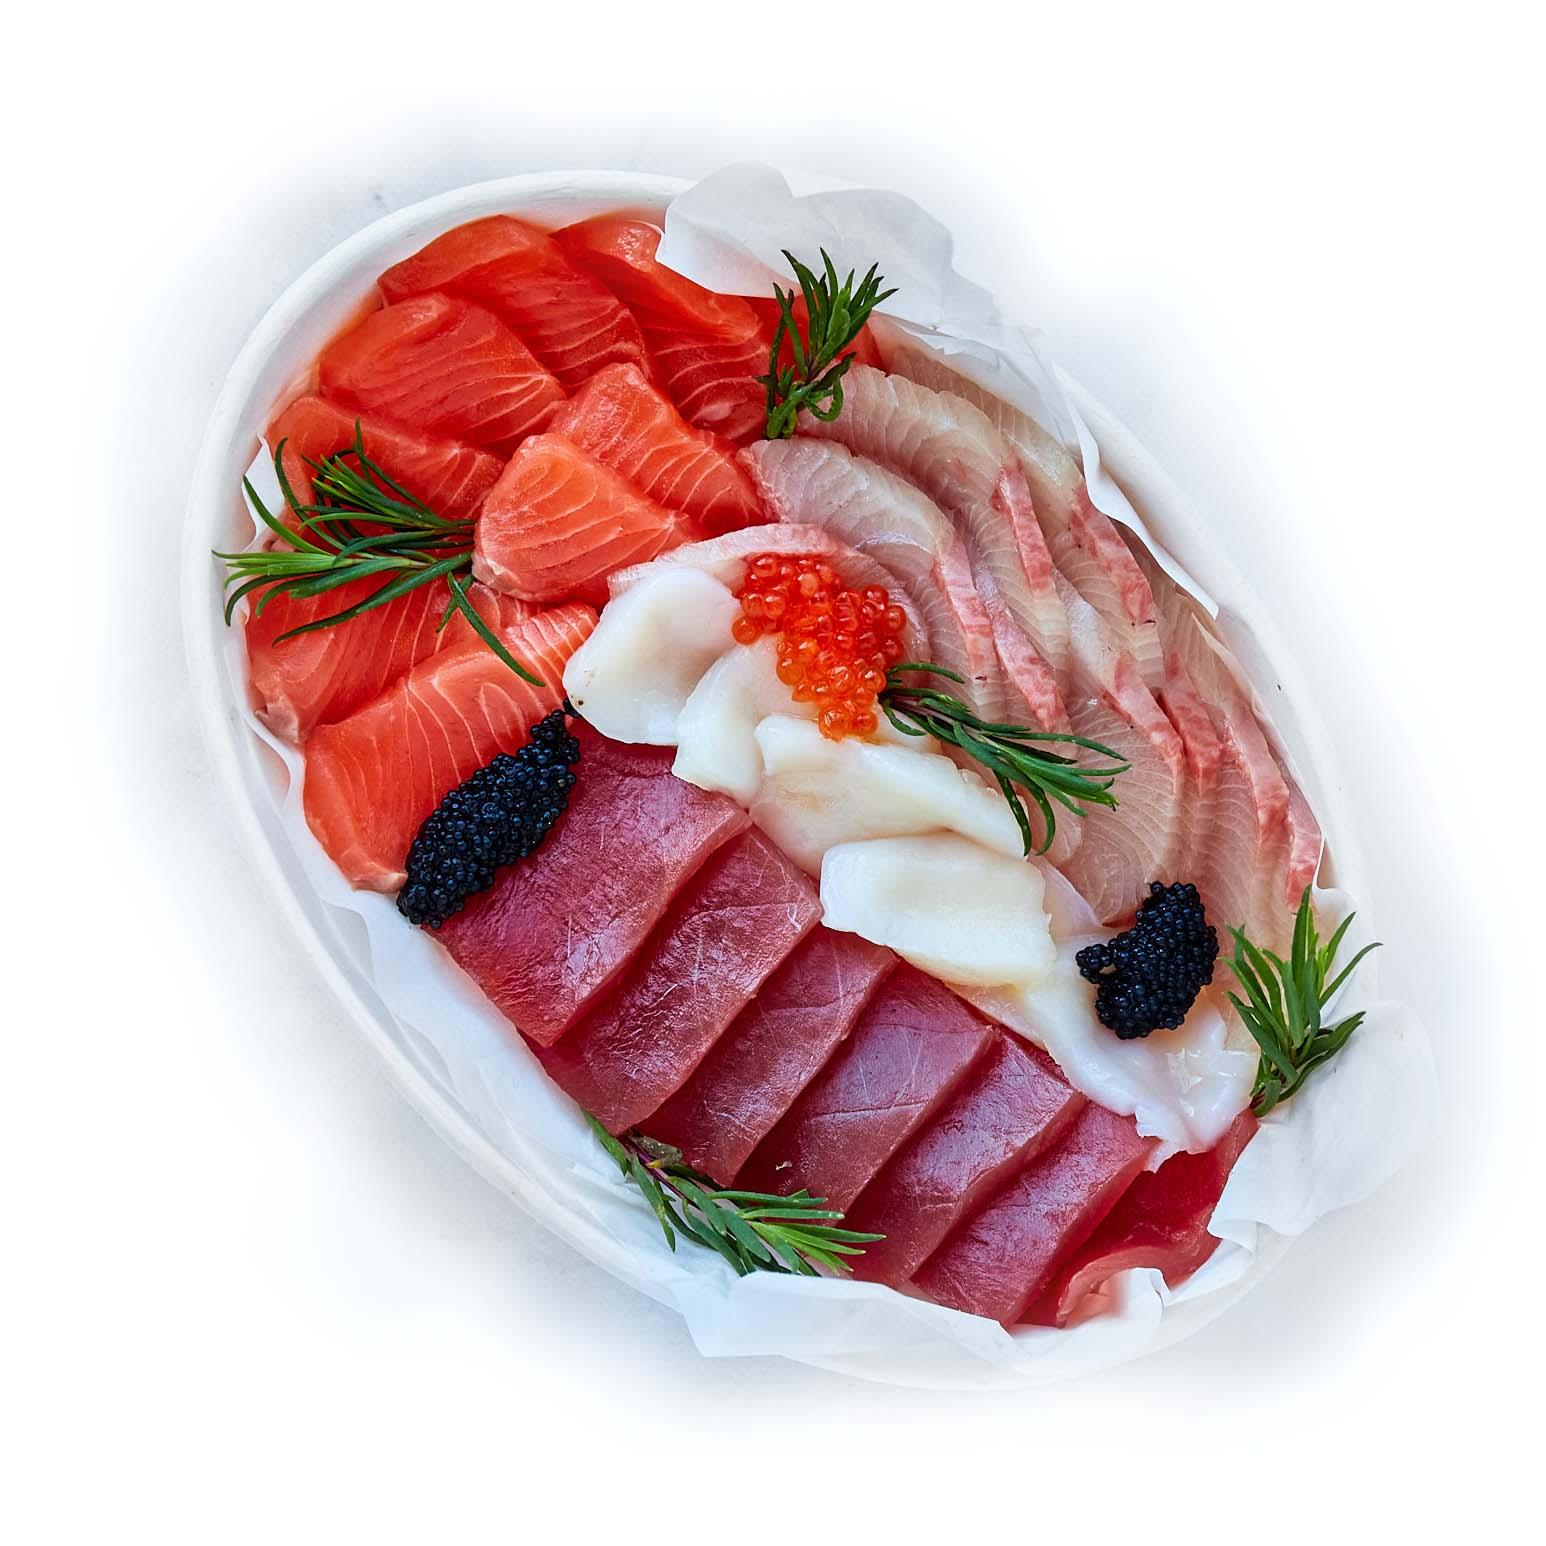 Sashimi platter for 2 with salmon, tuna, kingfish, scallops, salmon and black lumpfish from Steve Costi